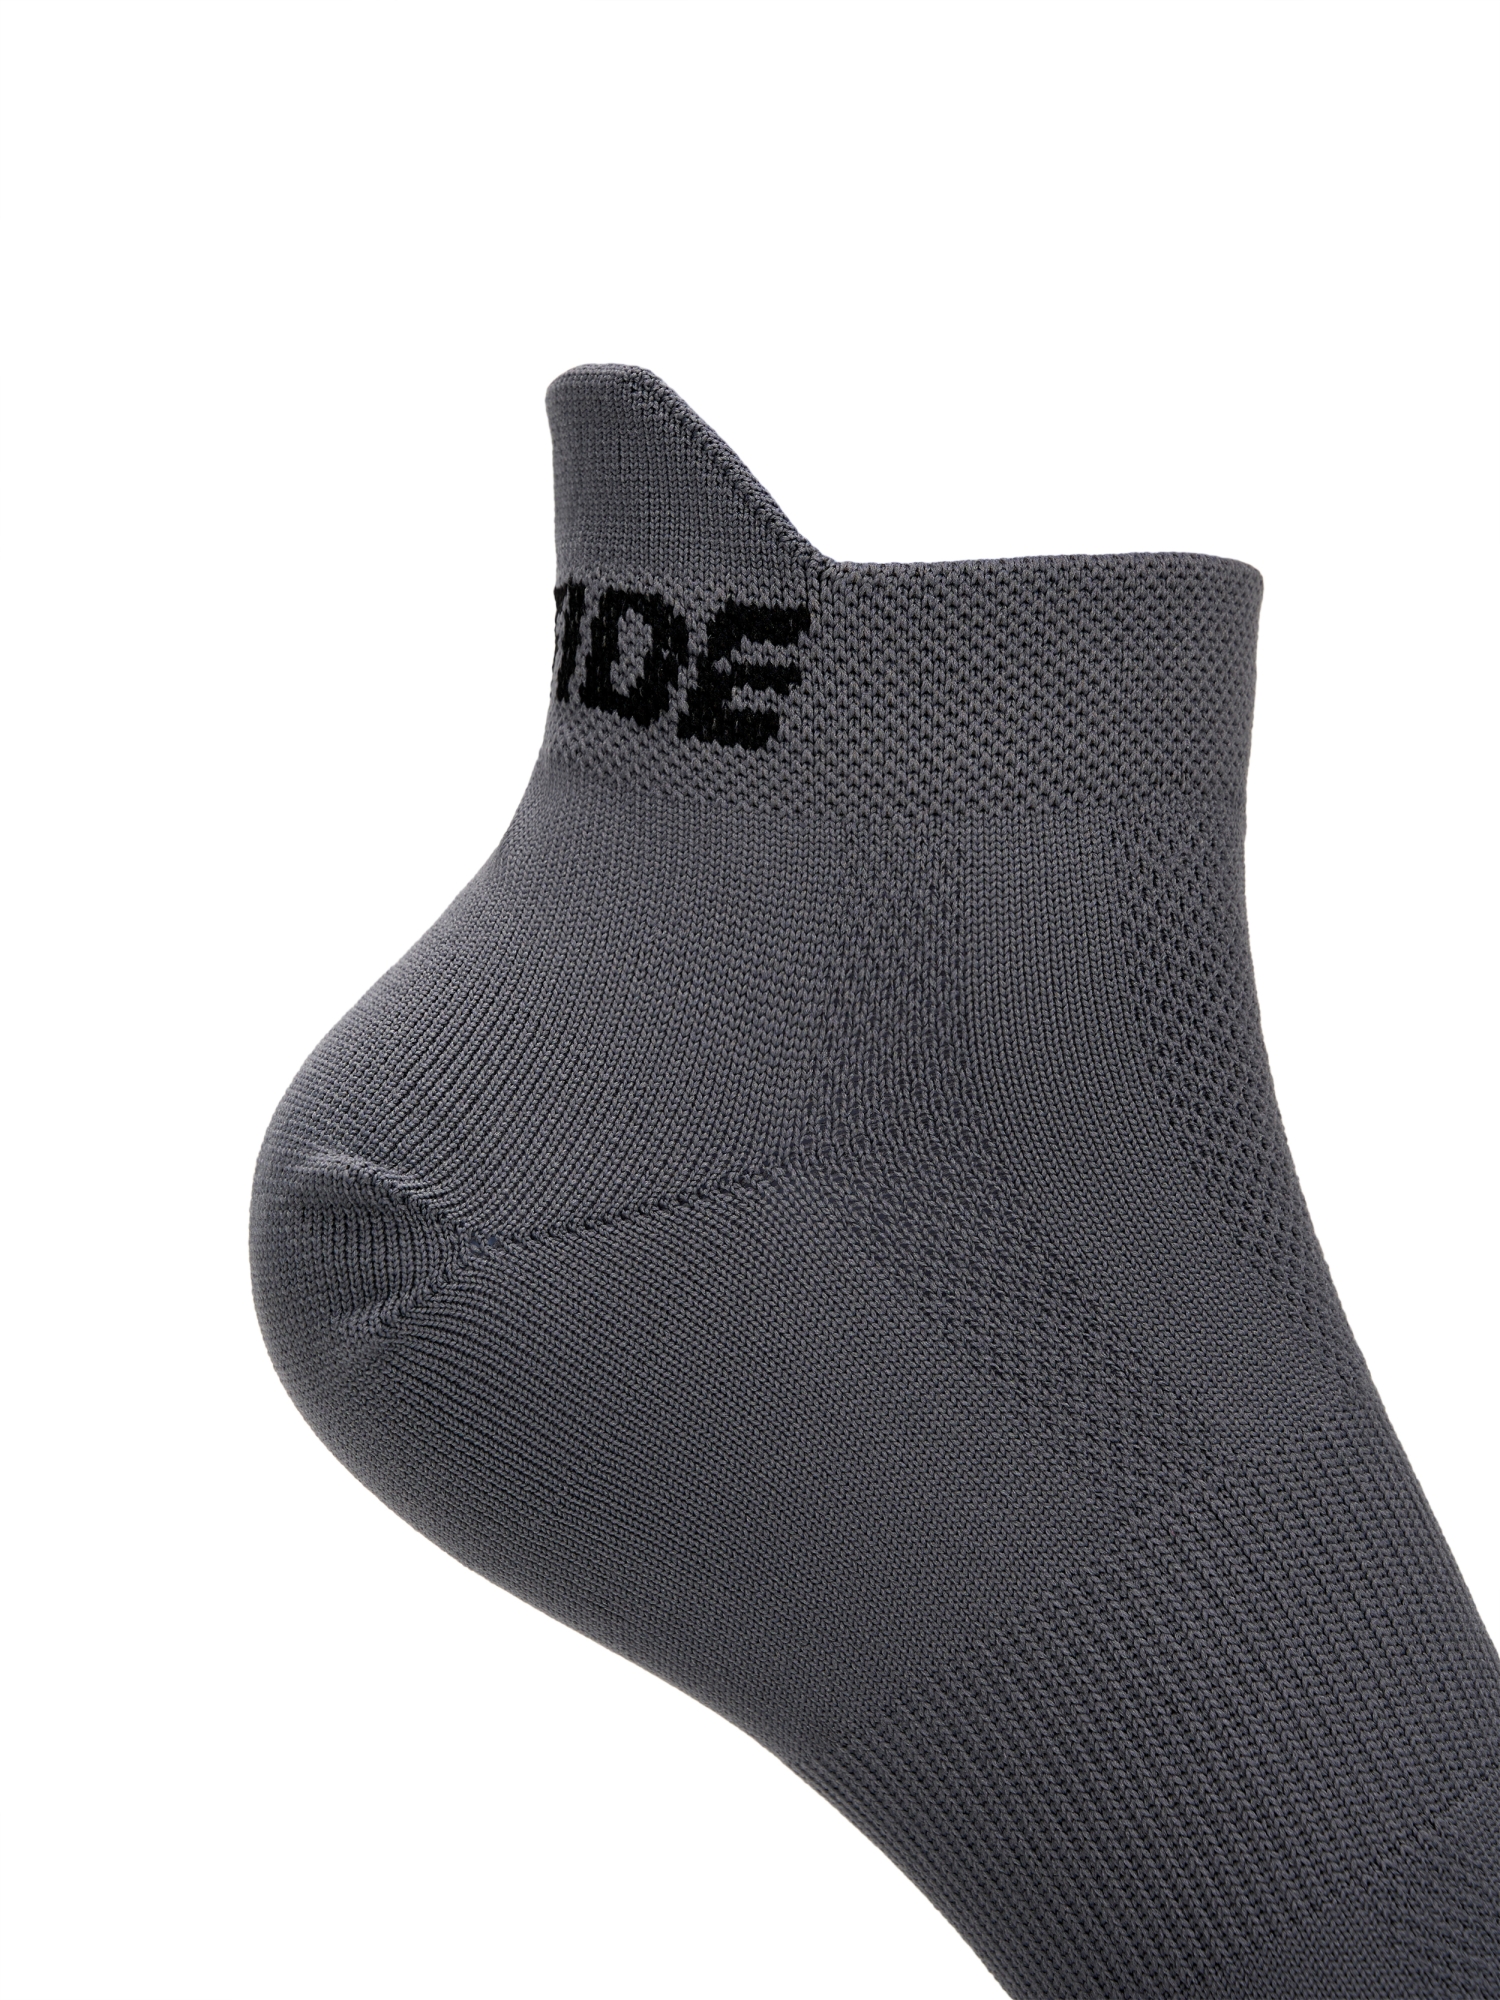 Bona Fide: Socks "Gray"(3 пары) фото 8